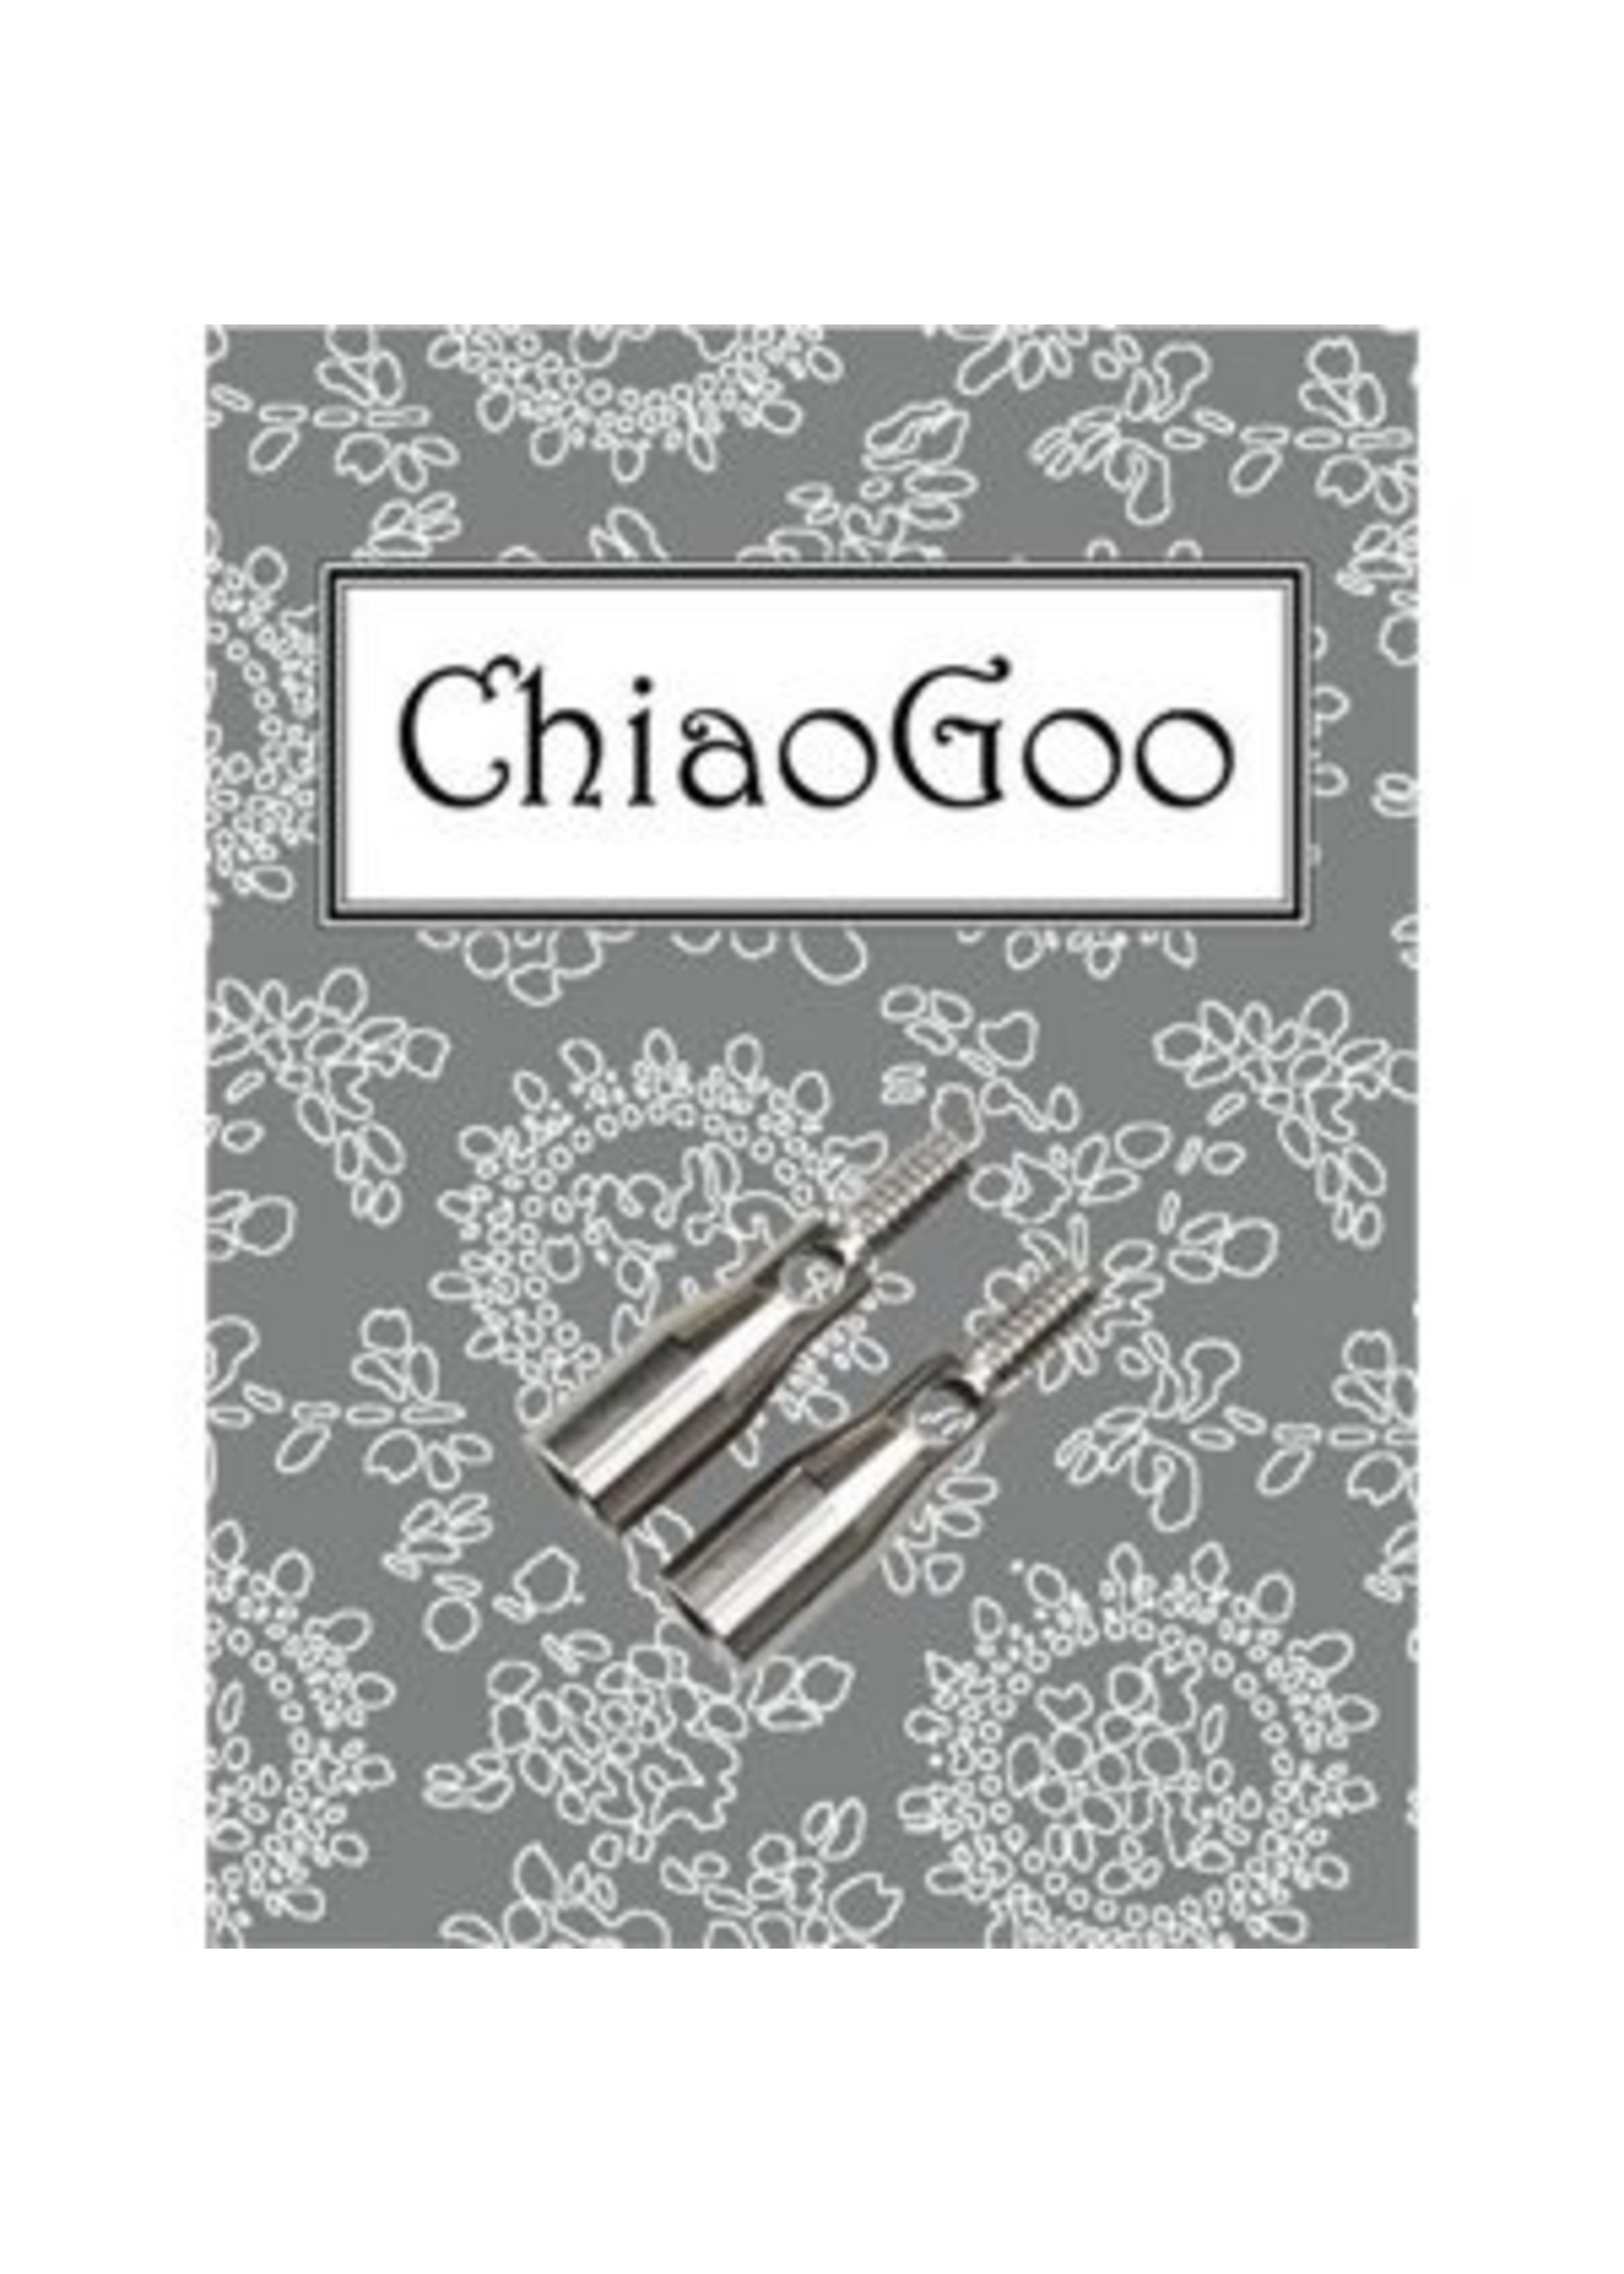 ChiaGoo Cable Connector